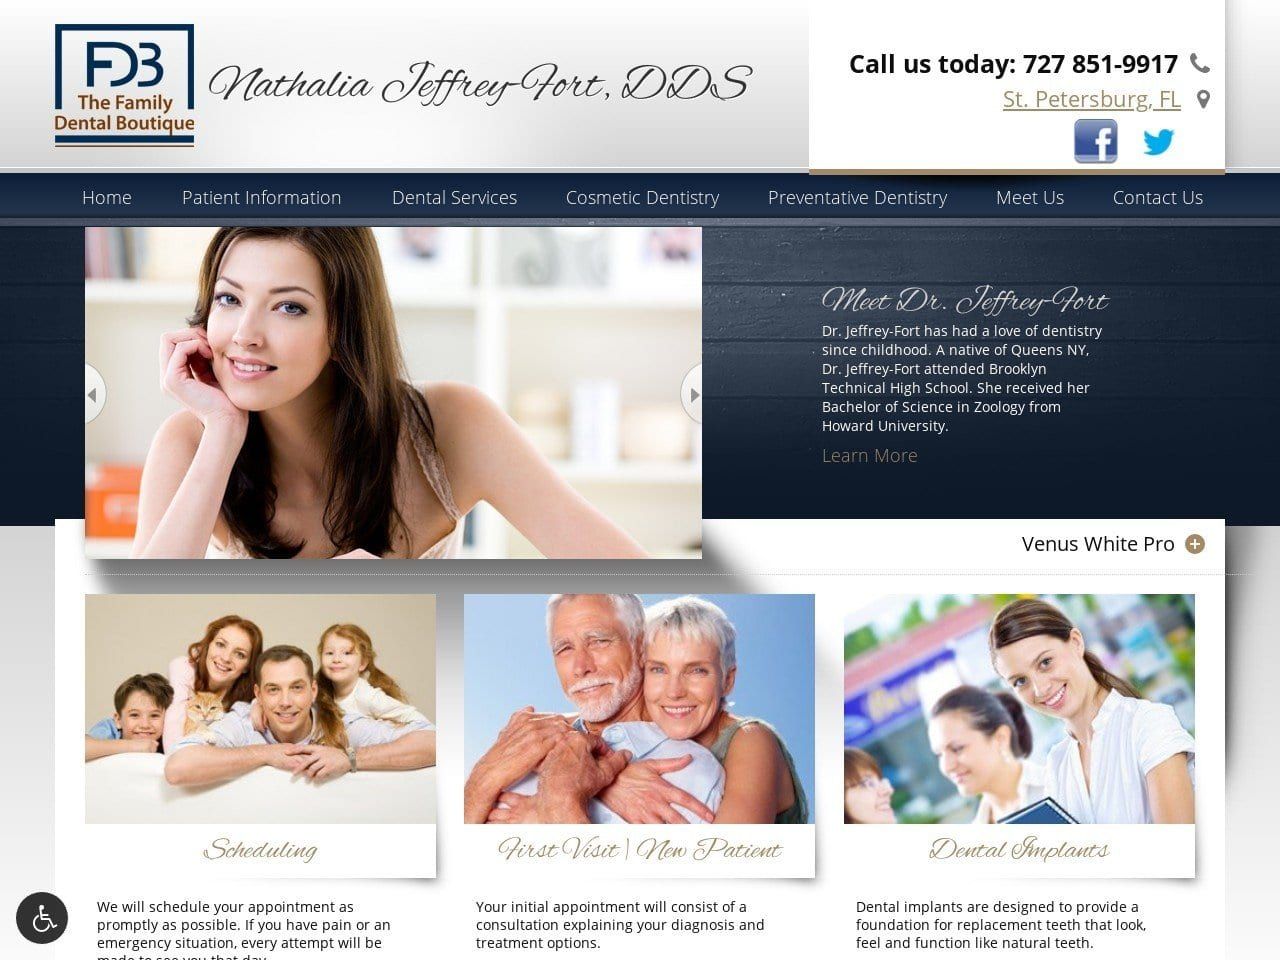 The Family Dental Boutique P.A. Website Screenshot from thefamilydentalboutique.com